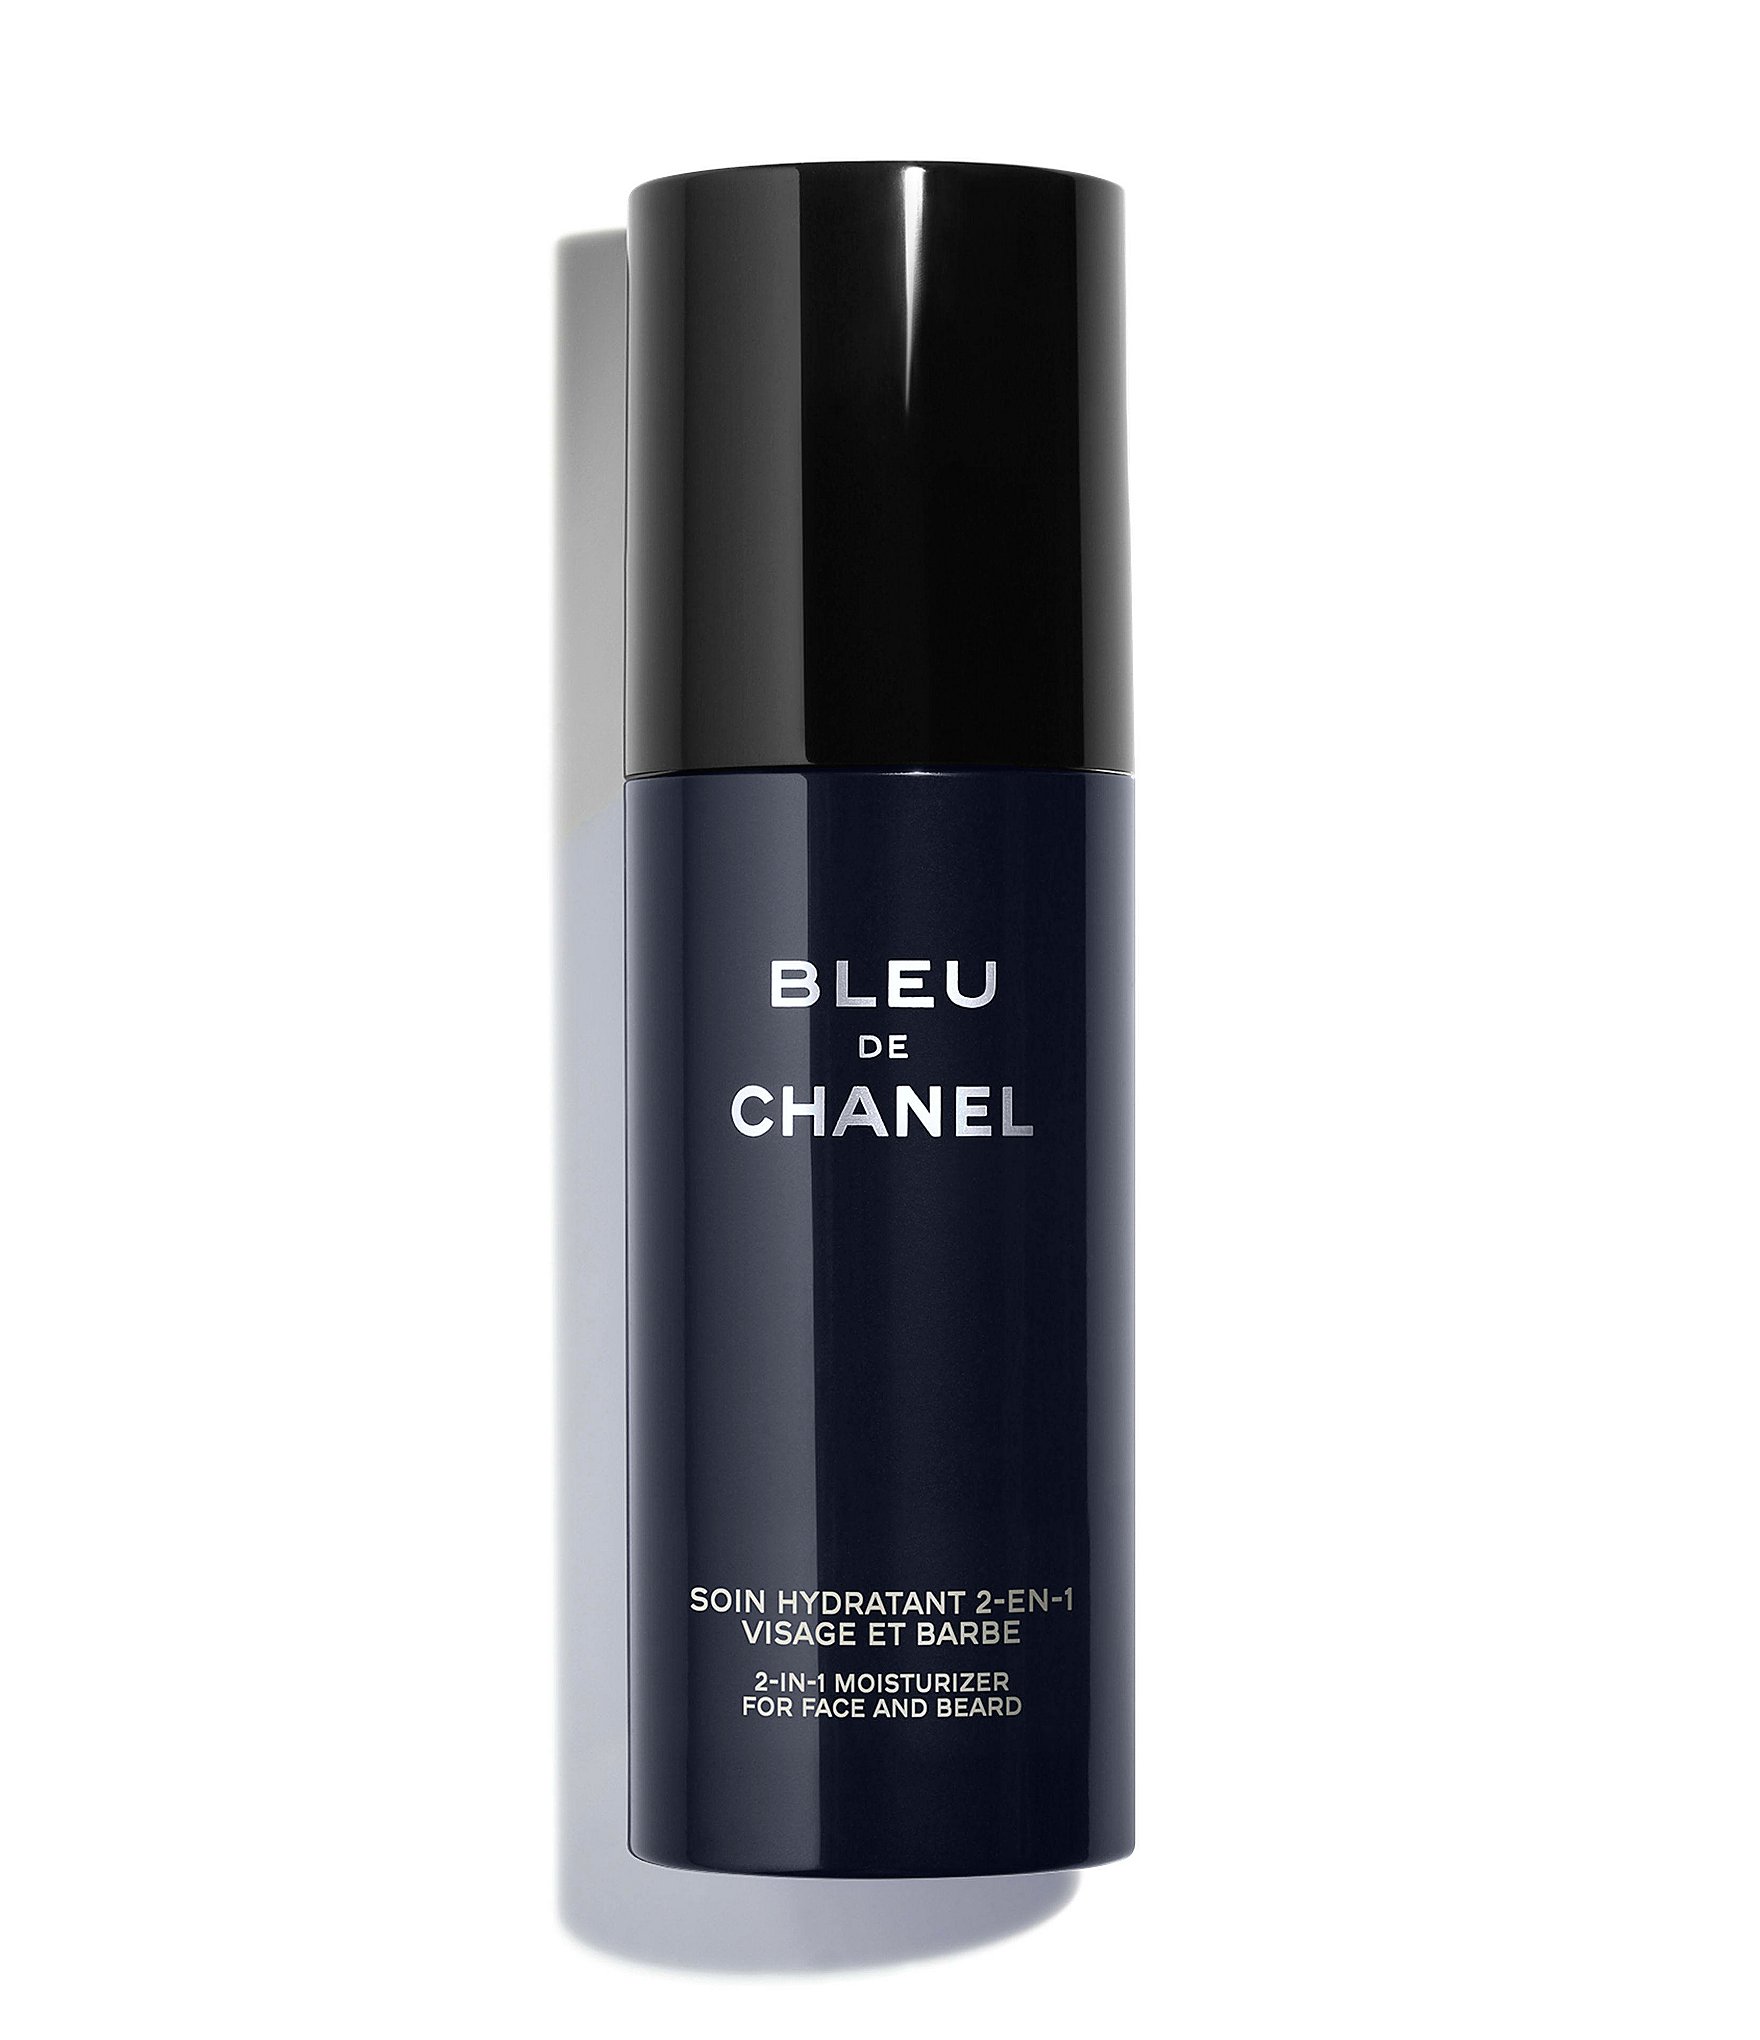 Bleu de Chanel 2-in-1 Moisturizer for Face and Beard